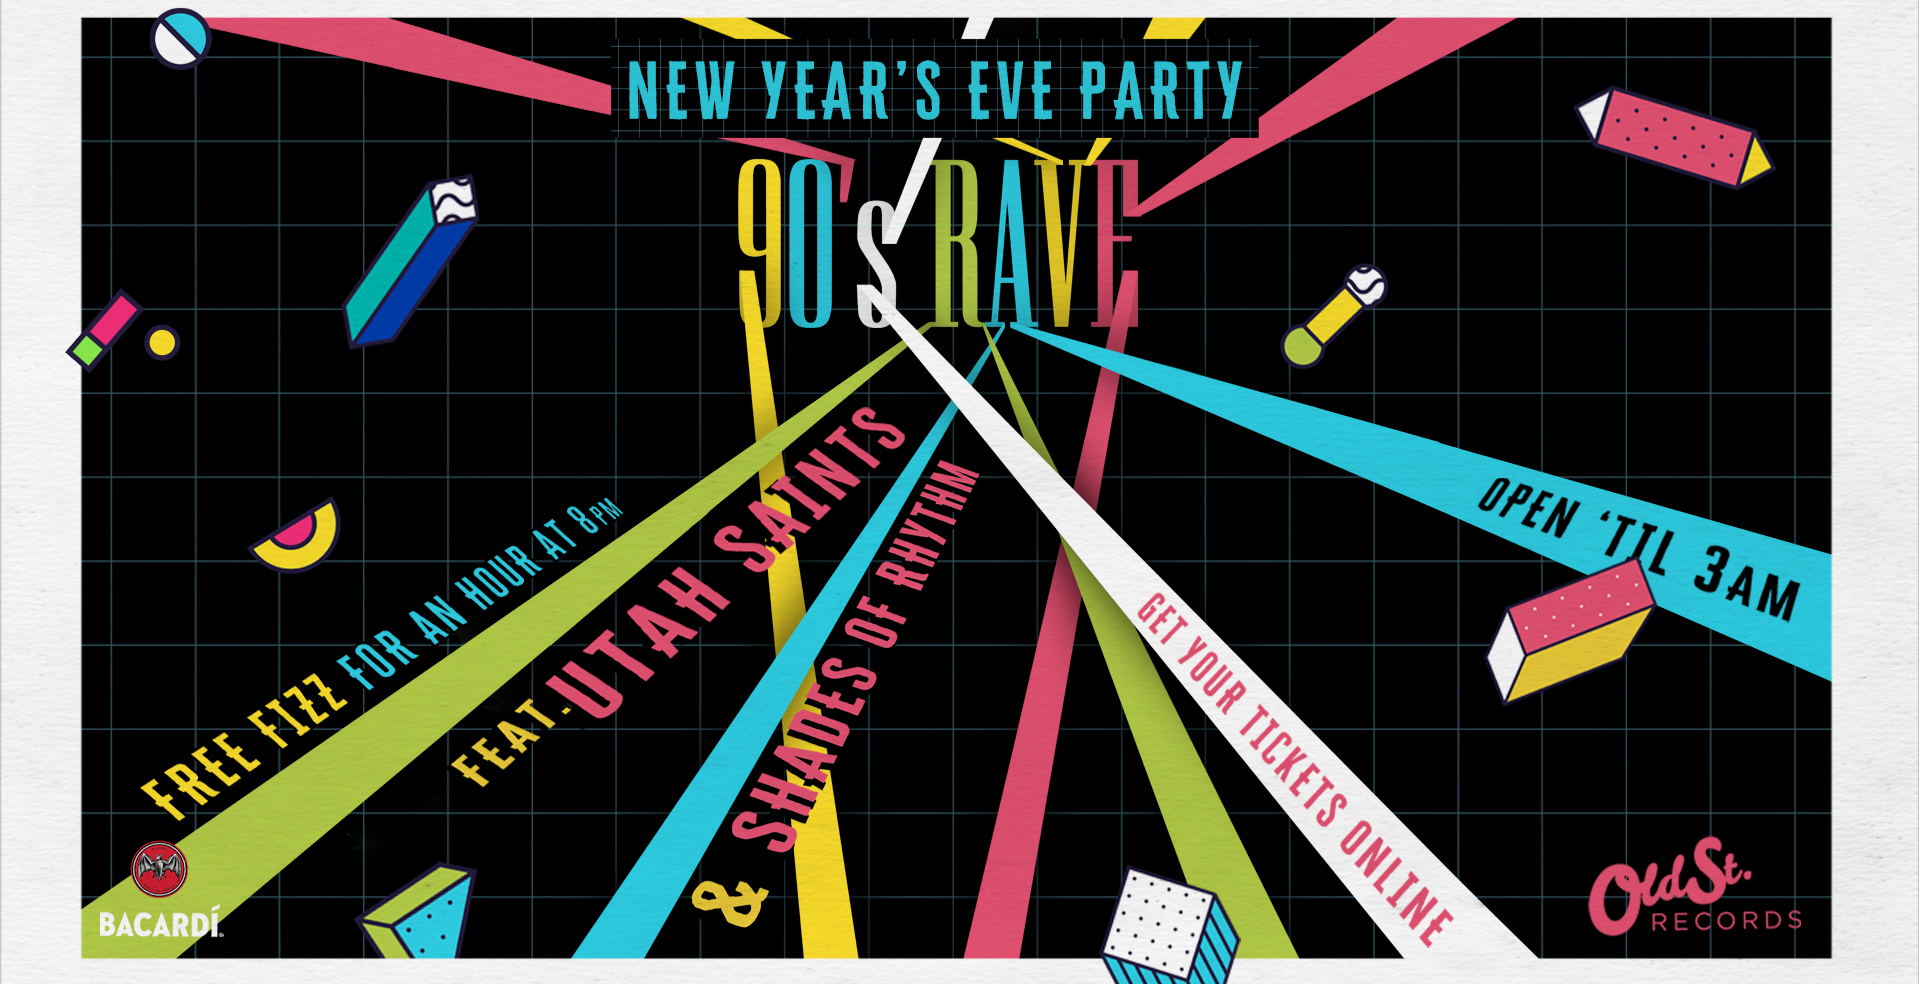 90's Rave feat. Utah Saints - New Year's Eve Party // Shoreditch, London, England, United Kingdom